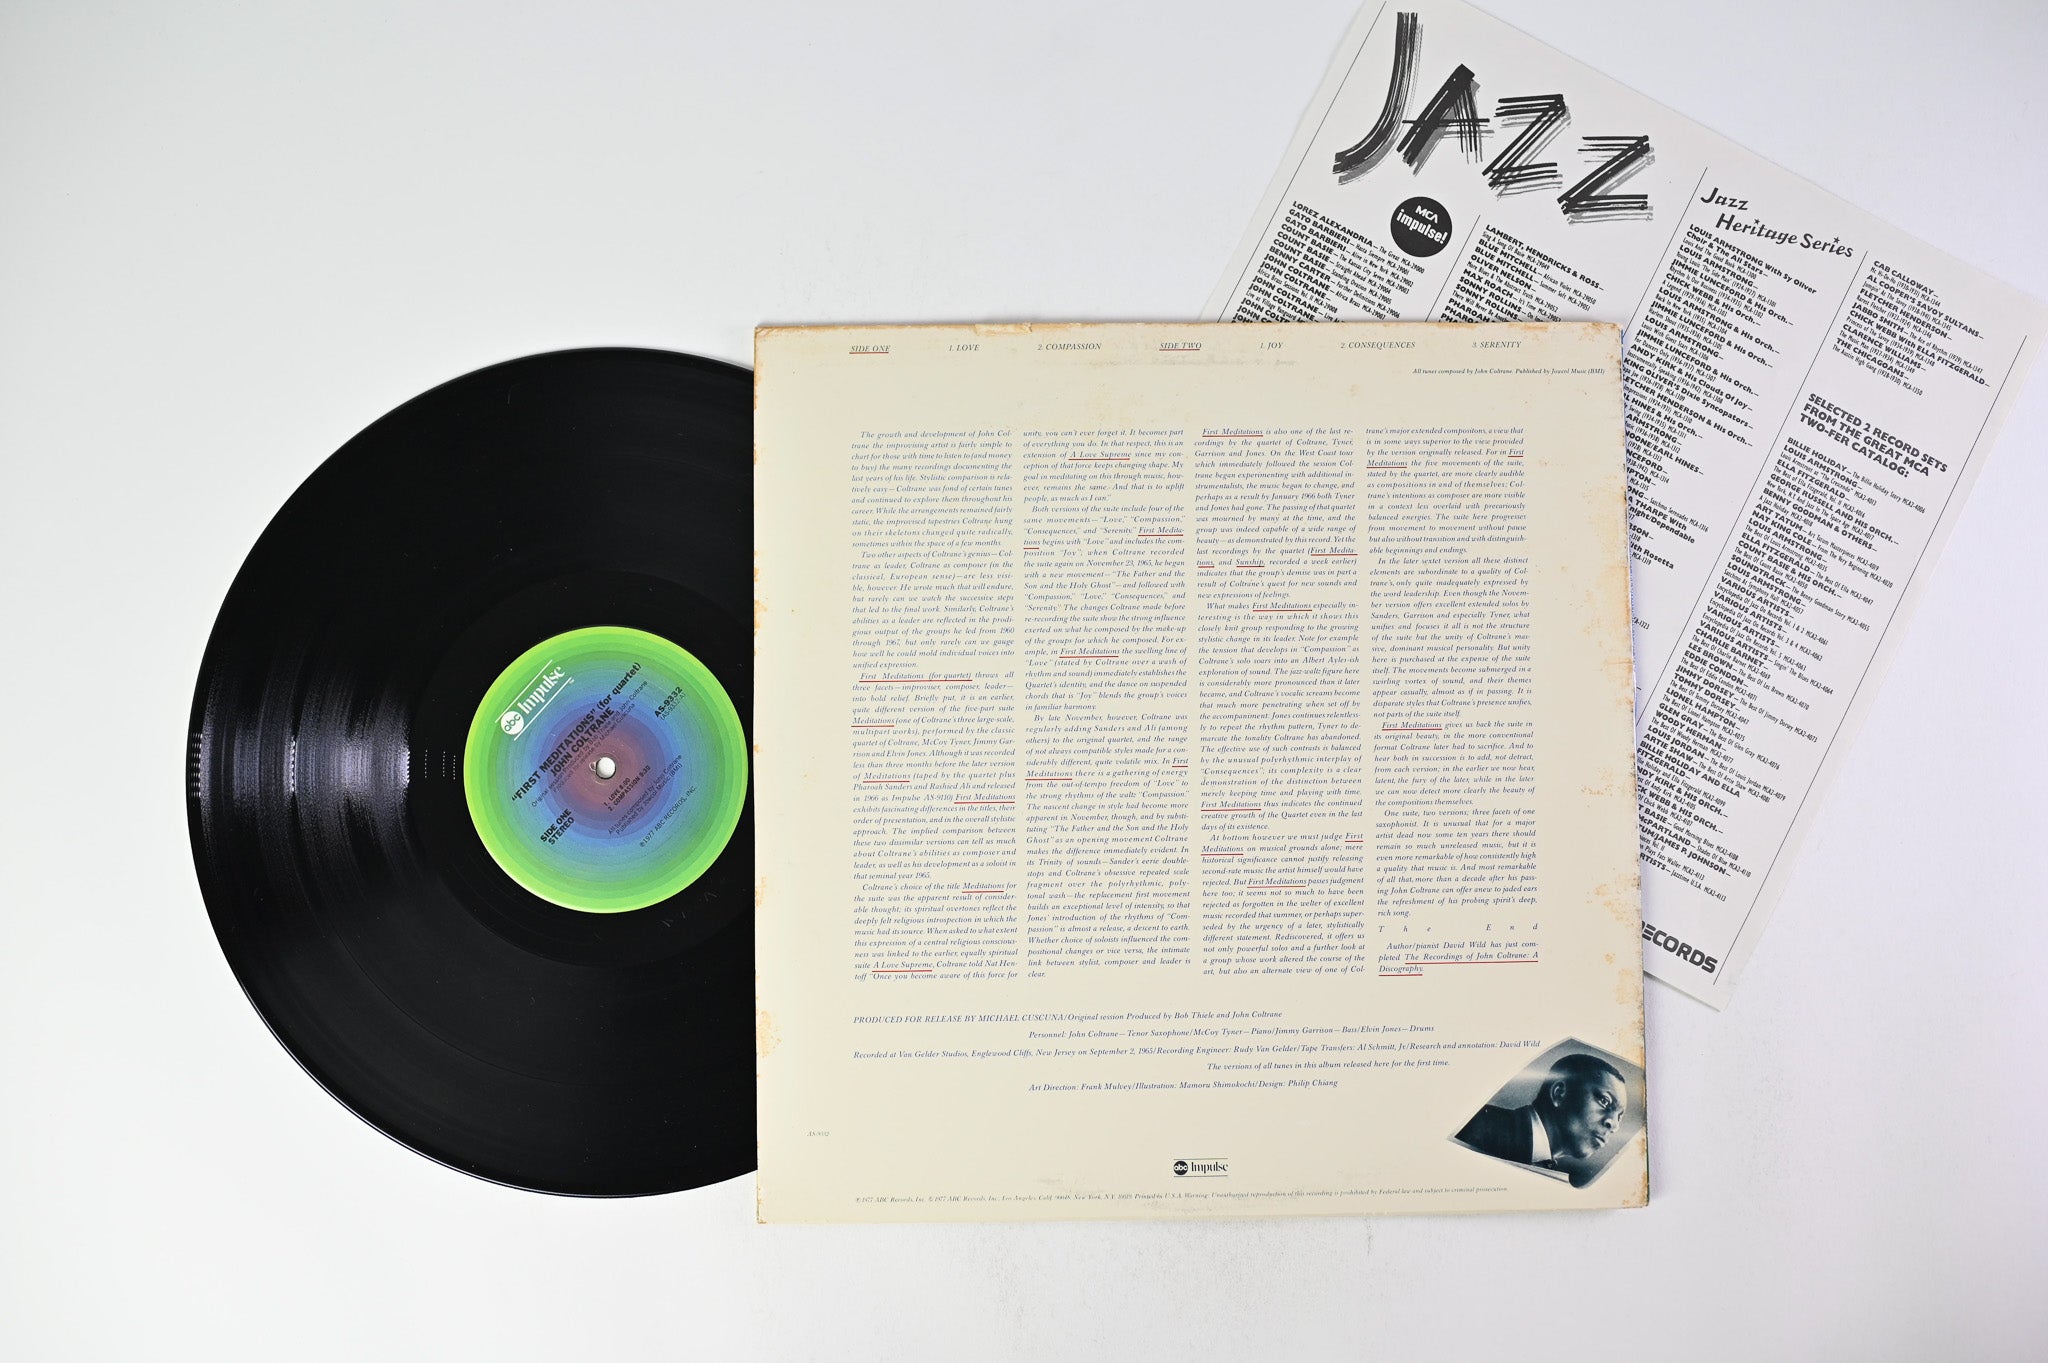 John Coltrane - First Meditations (For Quartet) on ABC Impulse!